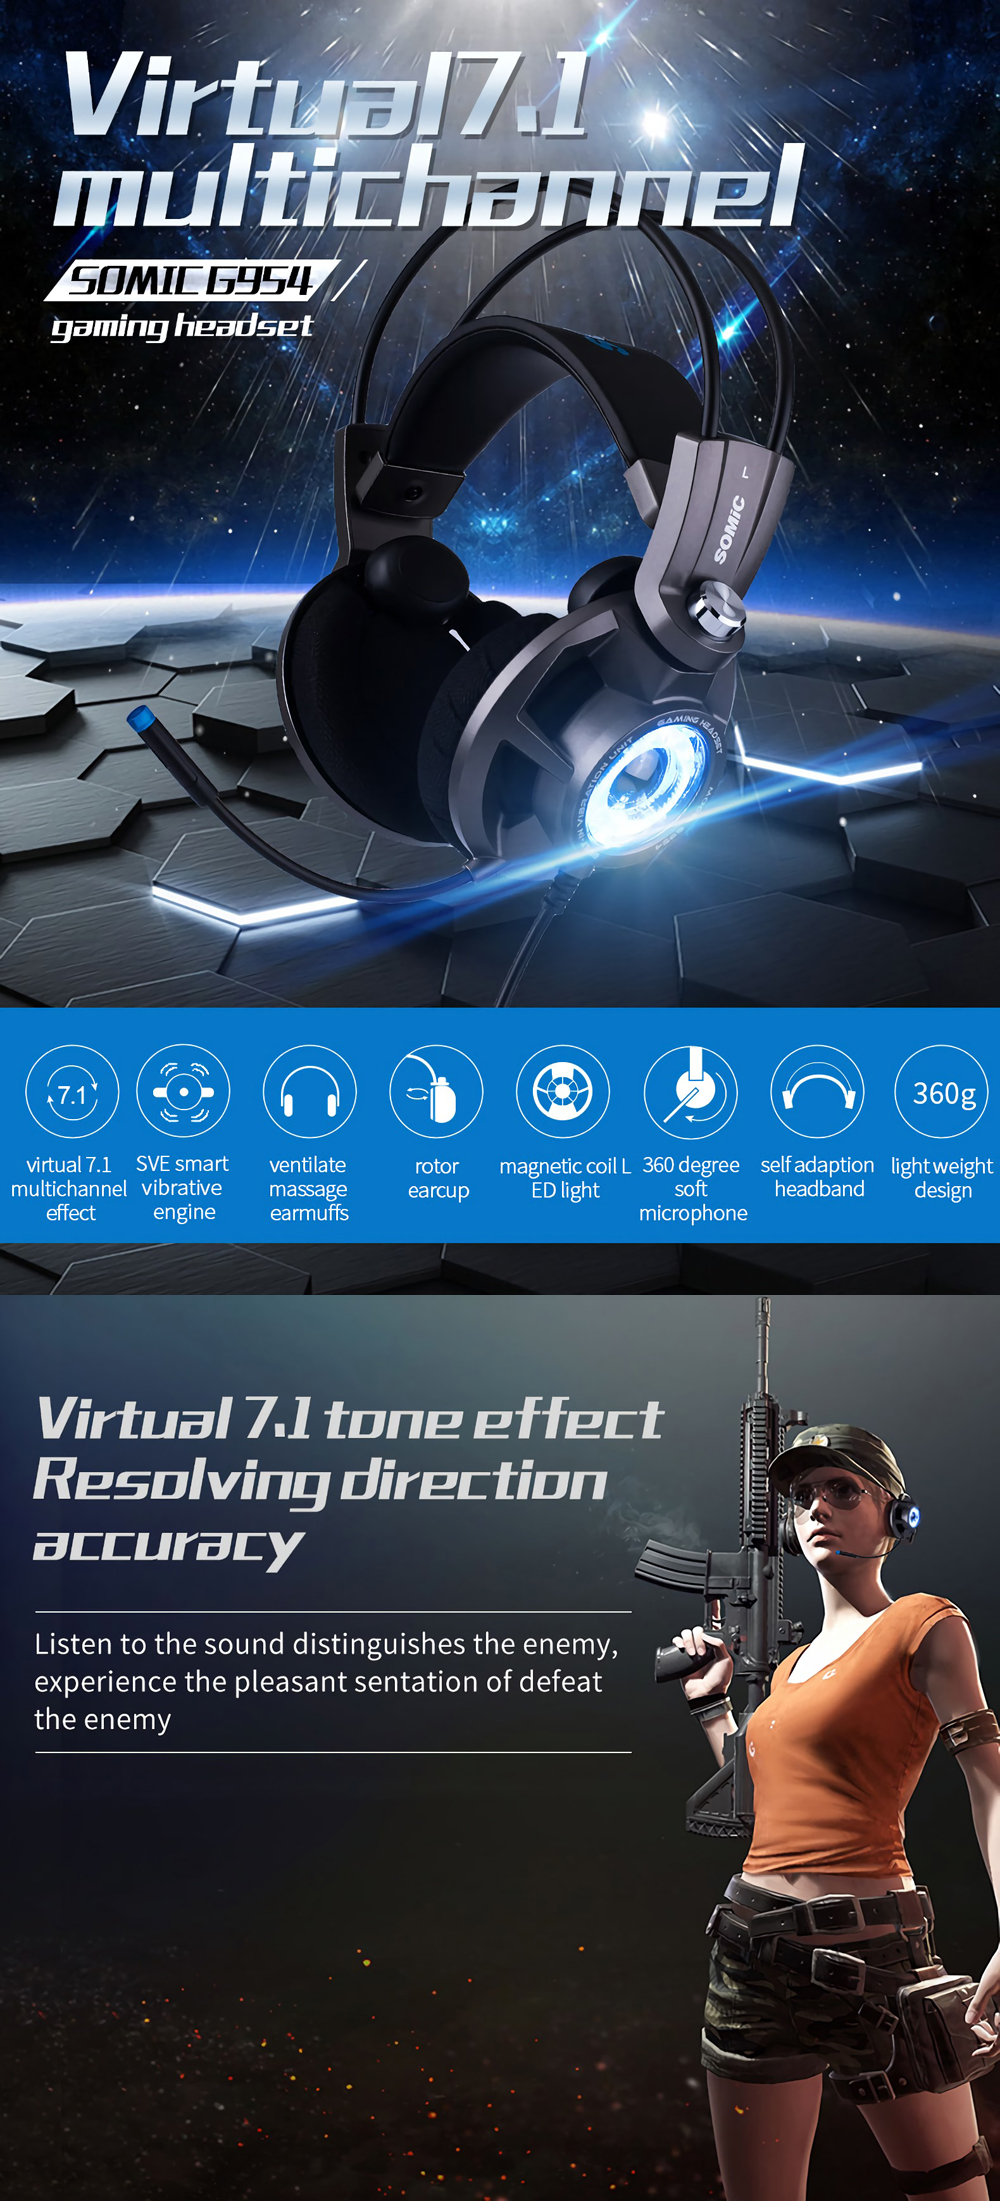 SOMiC G954 USB Wired Virtual 7.1 Surround Sound SVE Vibration Gaming Headphone Headset 24